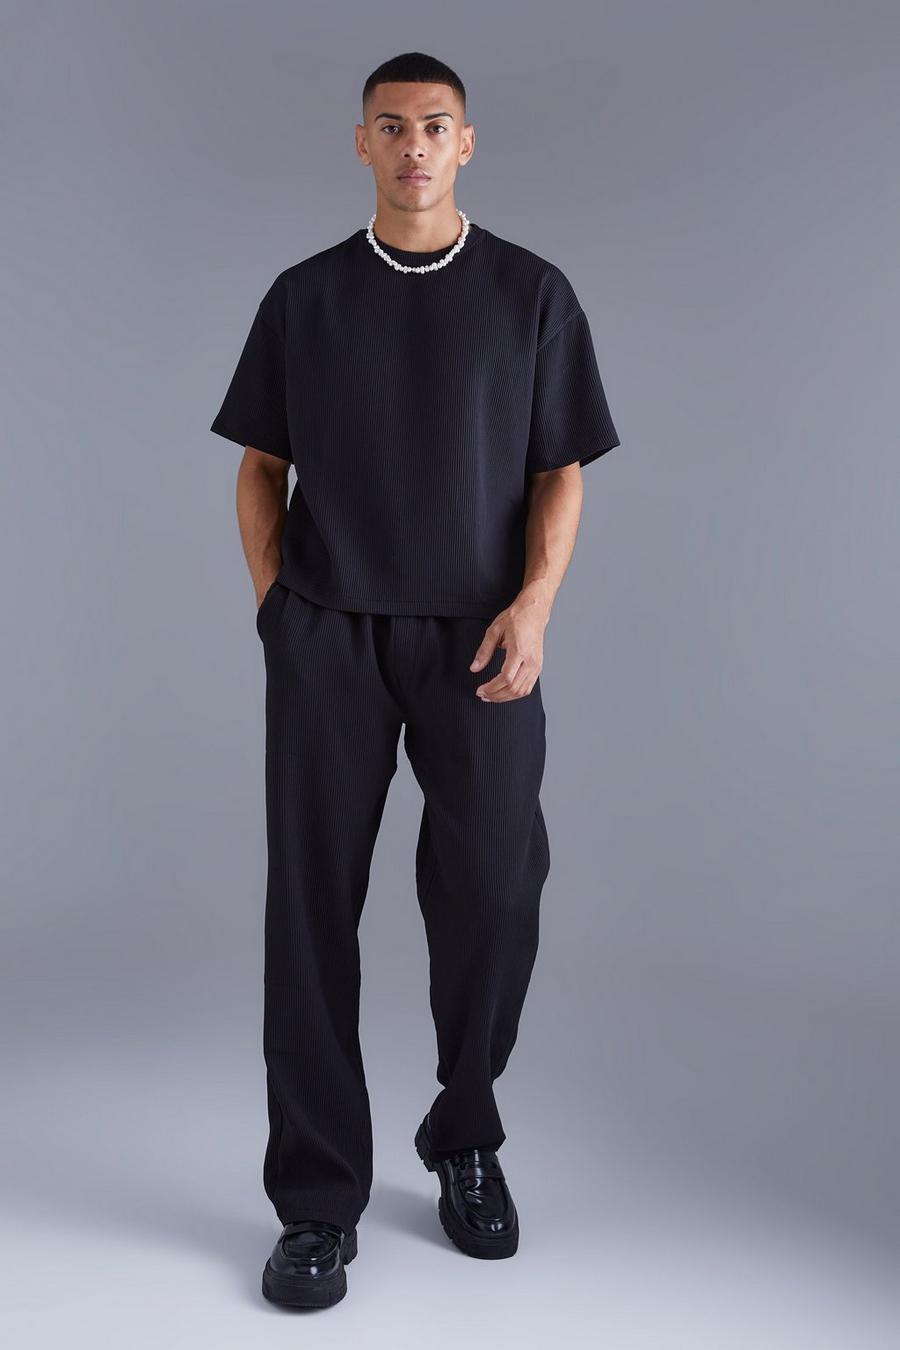 Kastiges Oversize T-Shirt & elastische lockere Hose, Black